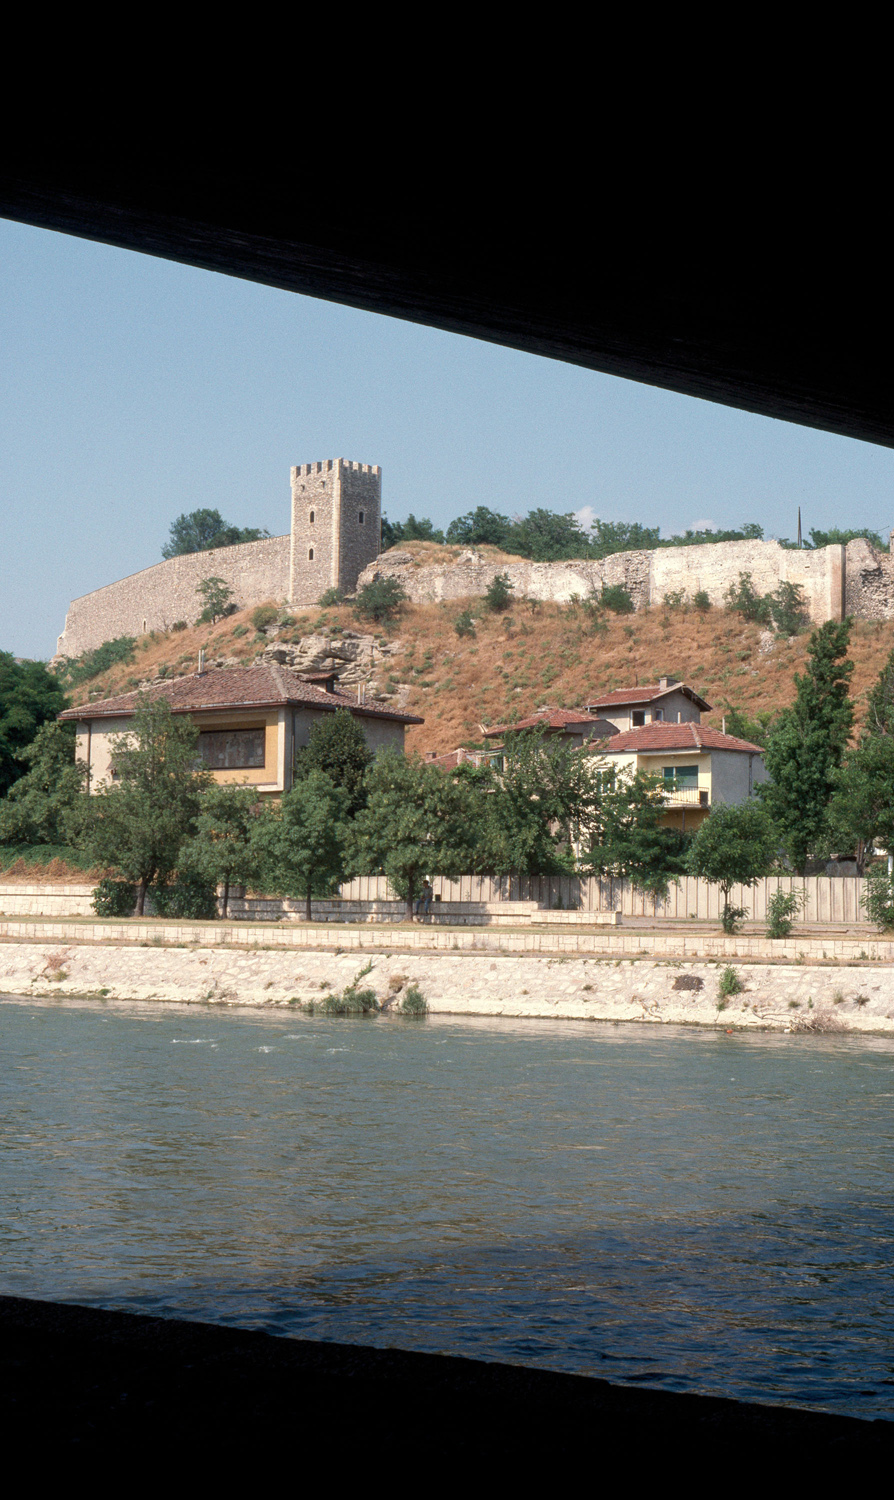 General view looking north across the Vardar river